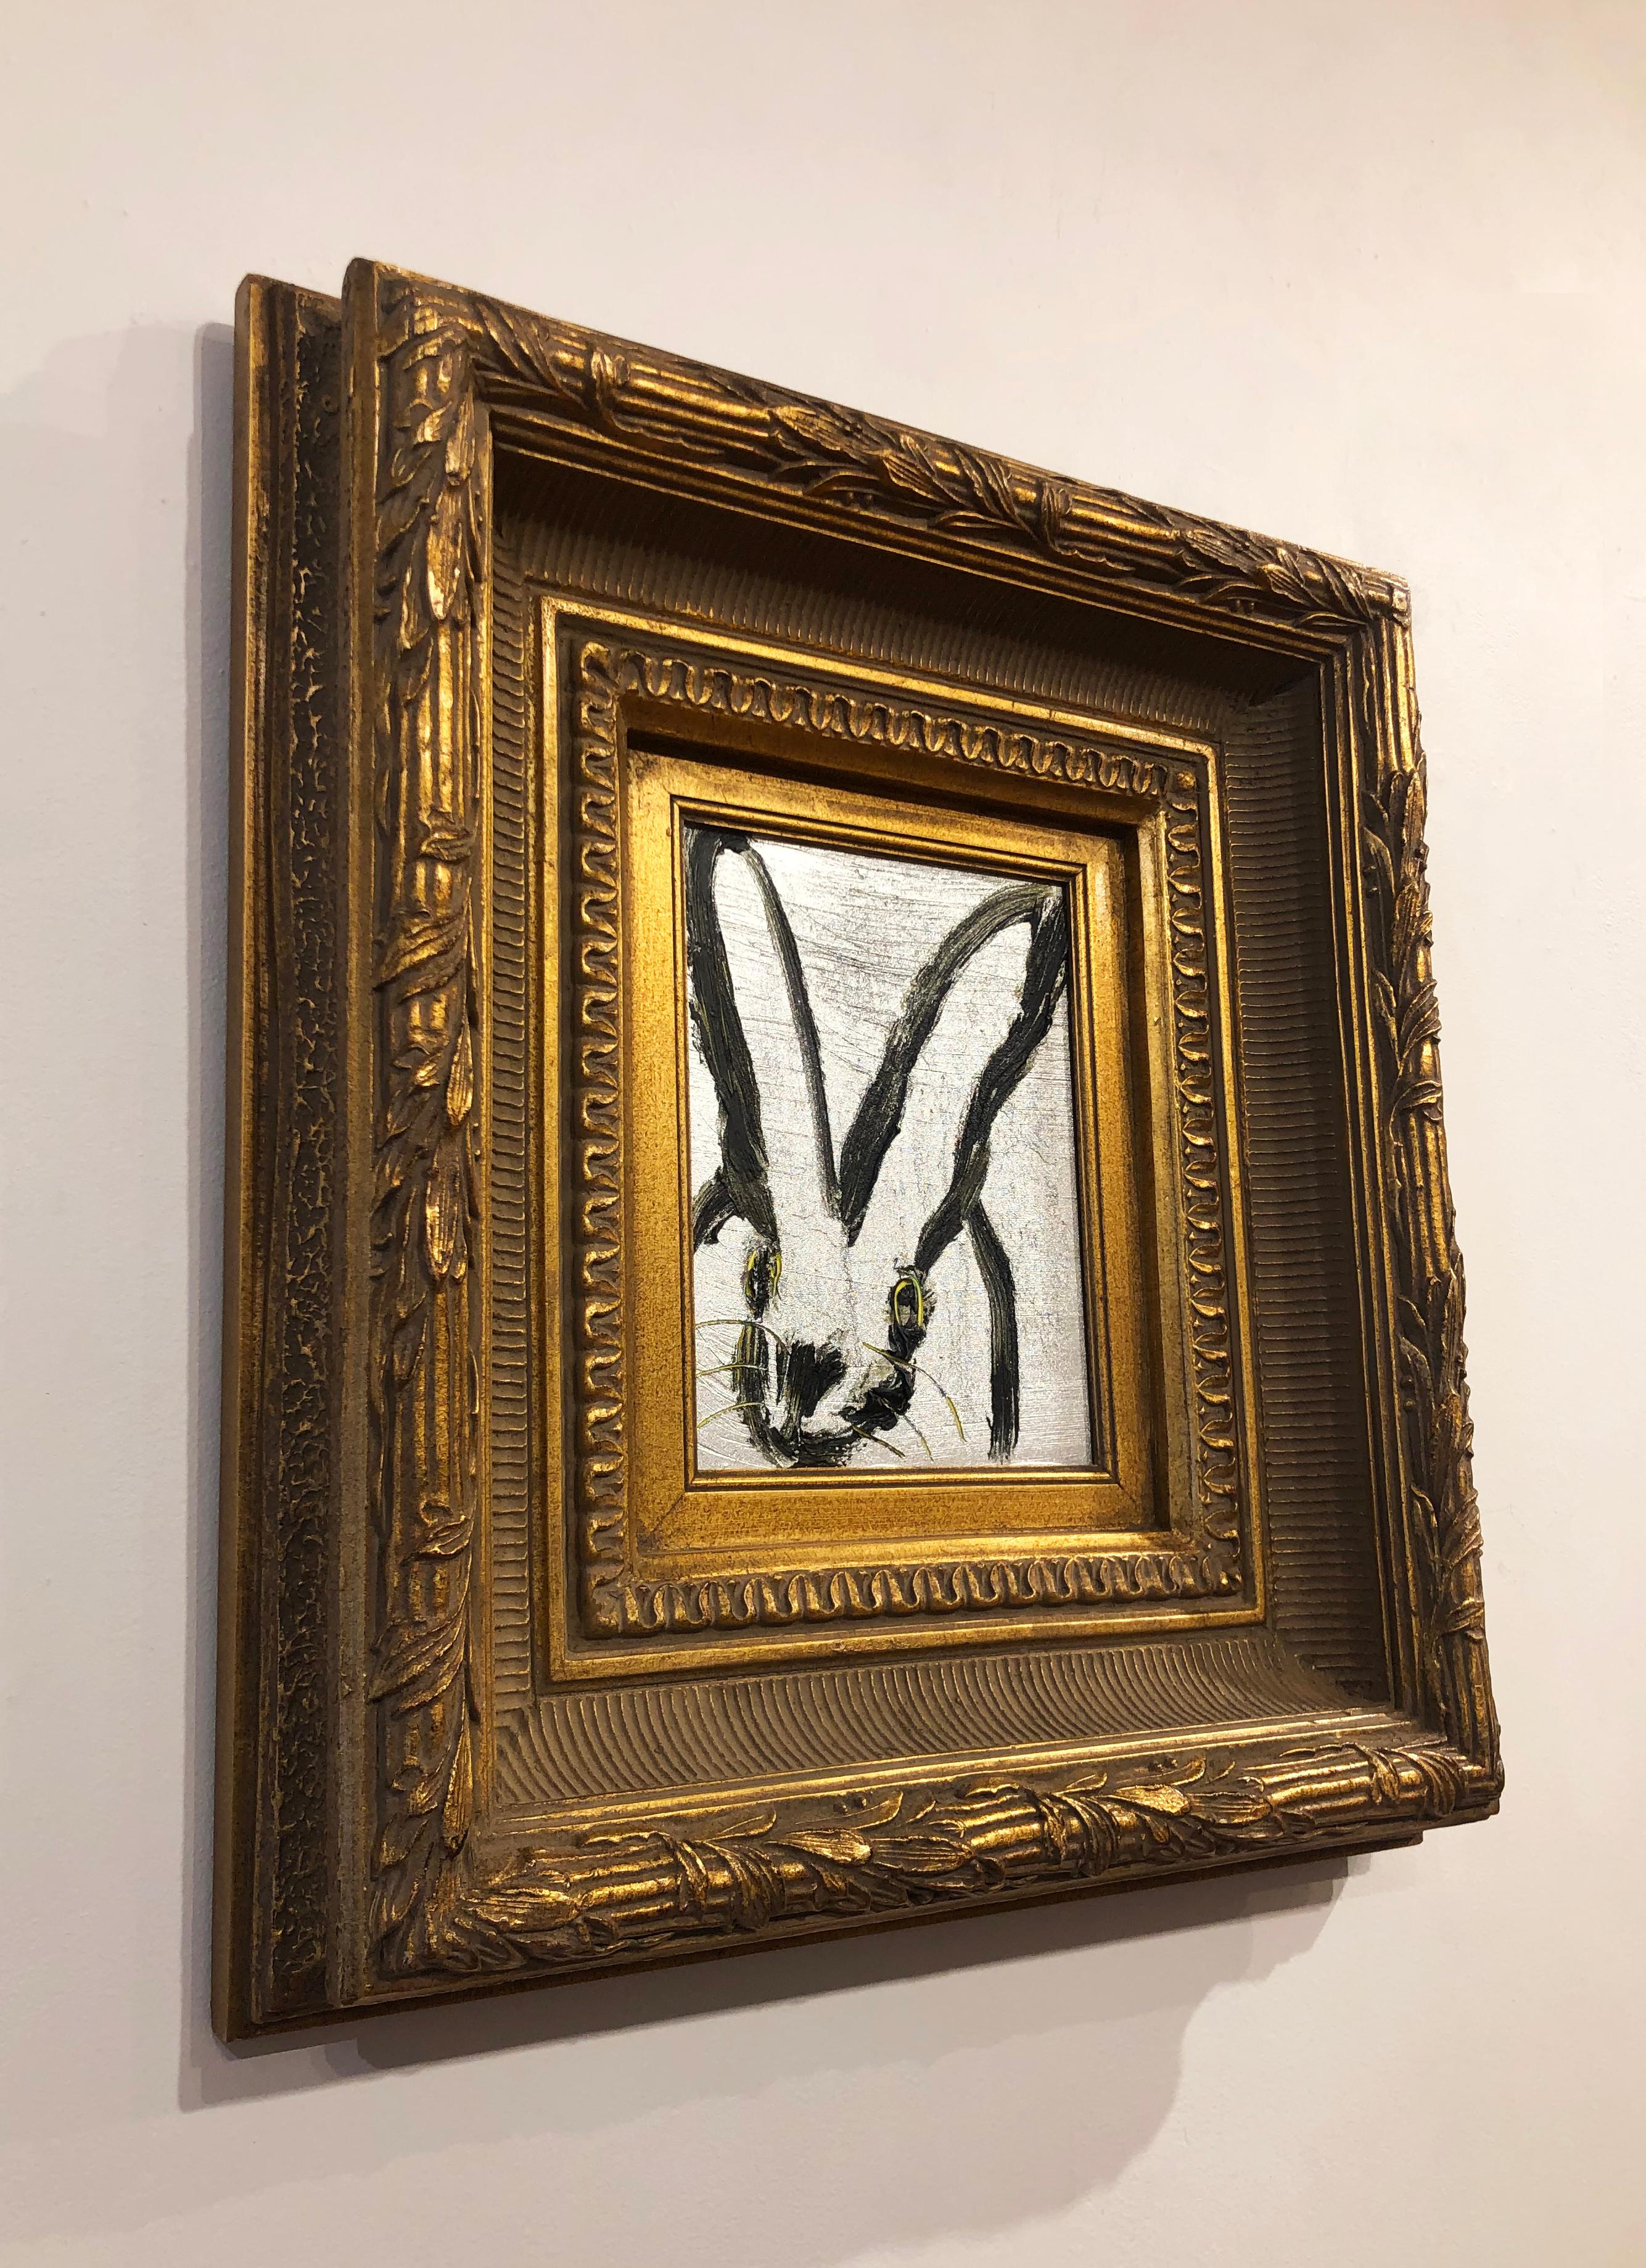 Artist:  Slonem, Hunt
Title:  Silver Bunny
Series:  Bunnies
Date:  2019
Medium:  Oil on panel
Unframed Dimensions:  10